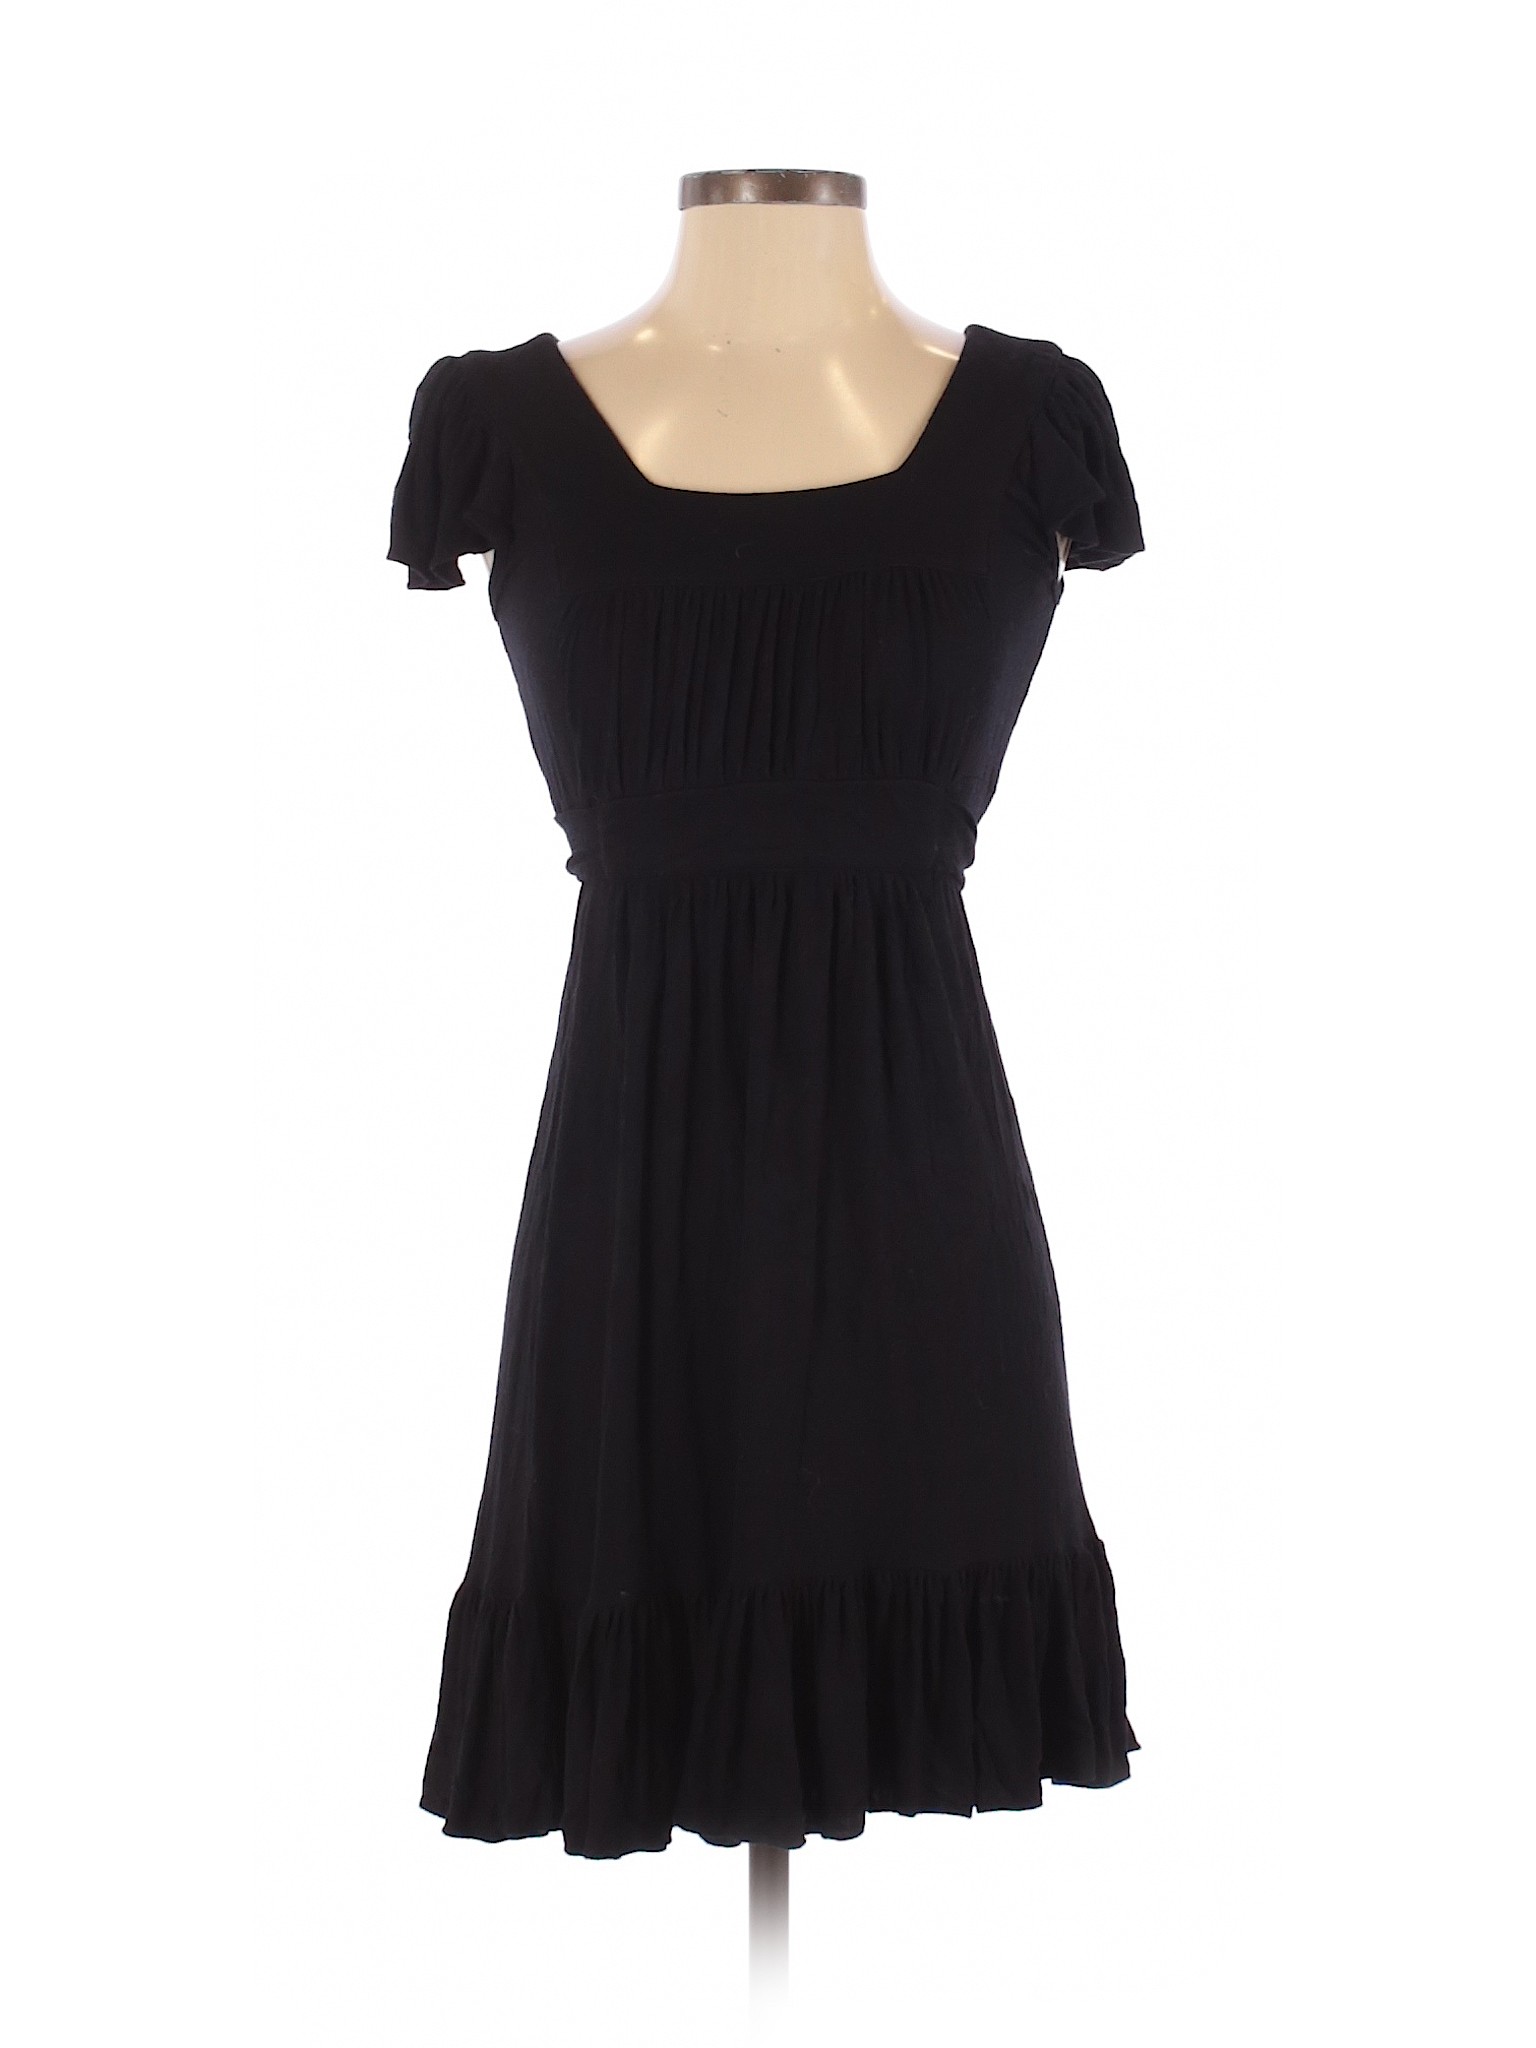 Betsey Johnson Women Black Casual Dress P | eBay